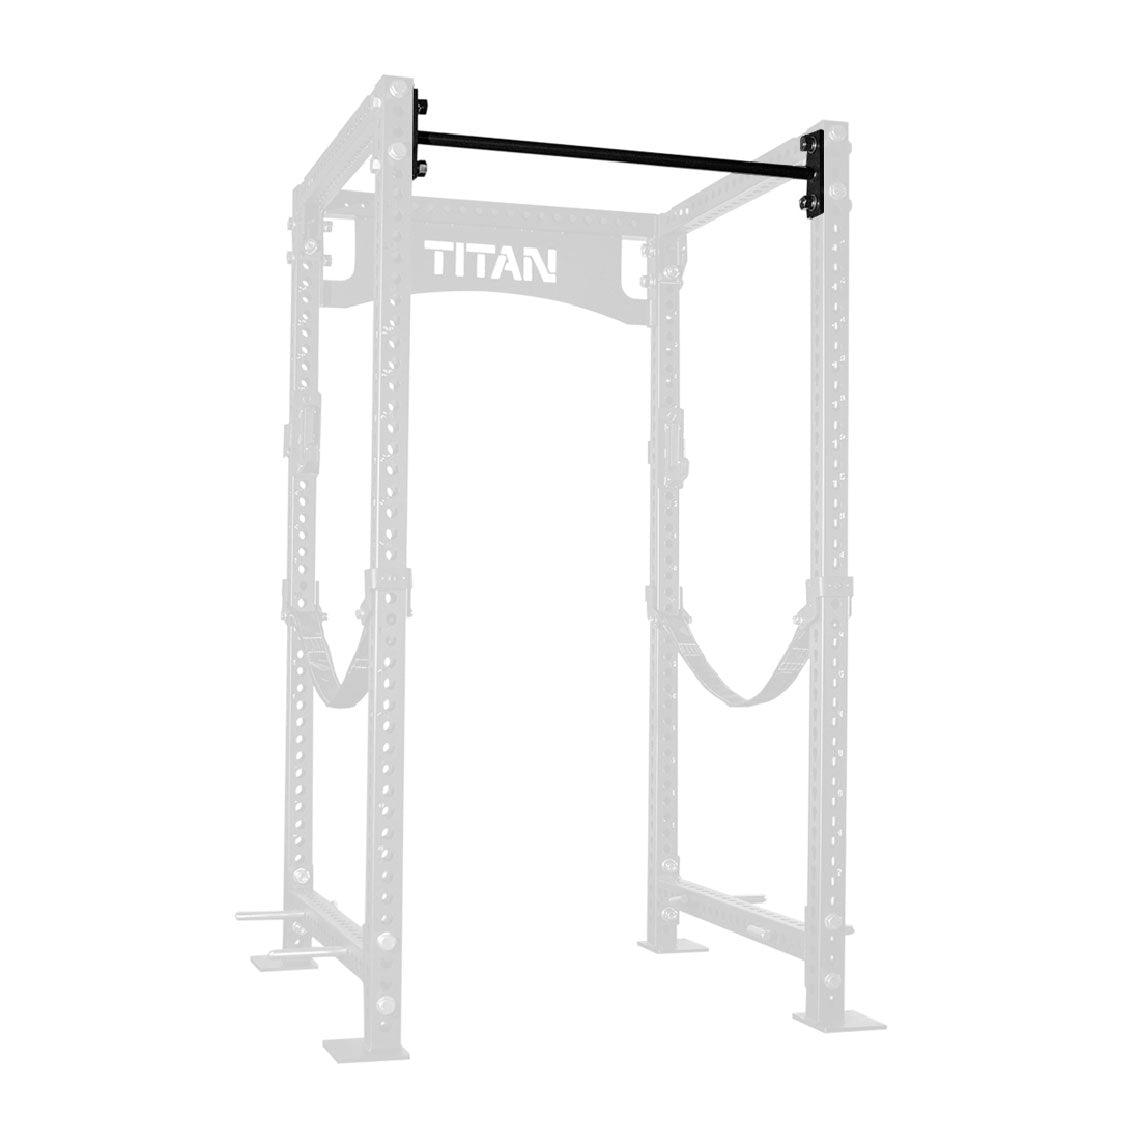 TITAN Series 1.25" Single Pull-Up Bar - view 7